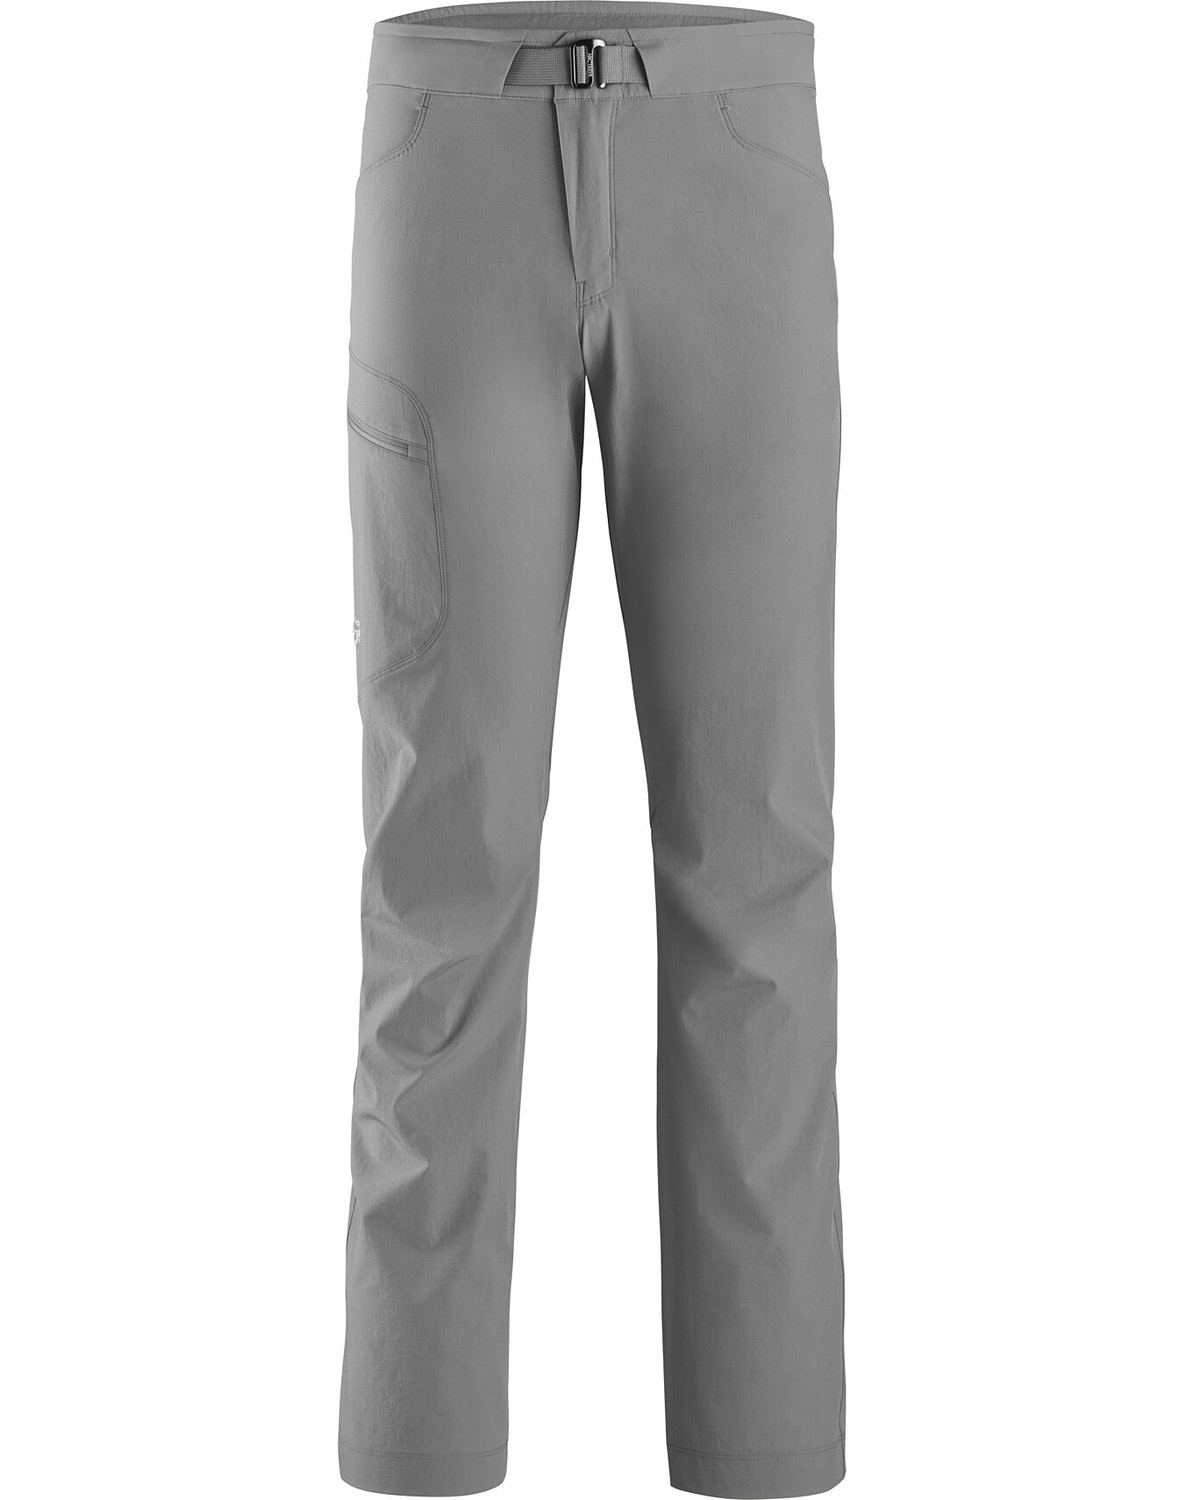 Pantaloni Da Sci Arc'teryx Lefroy Uomo Grigie - IT-757149